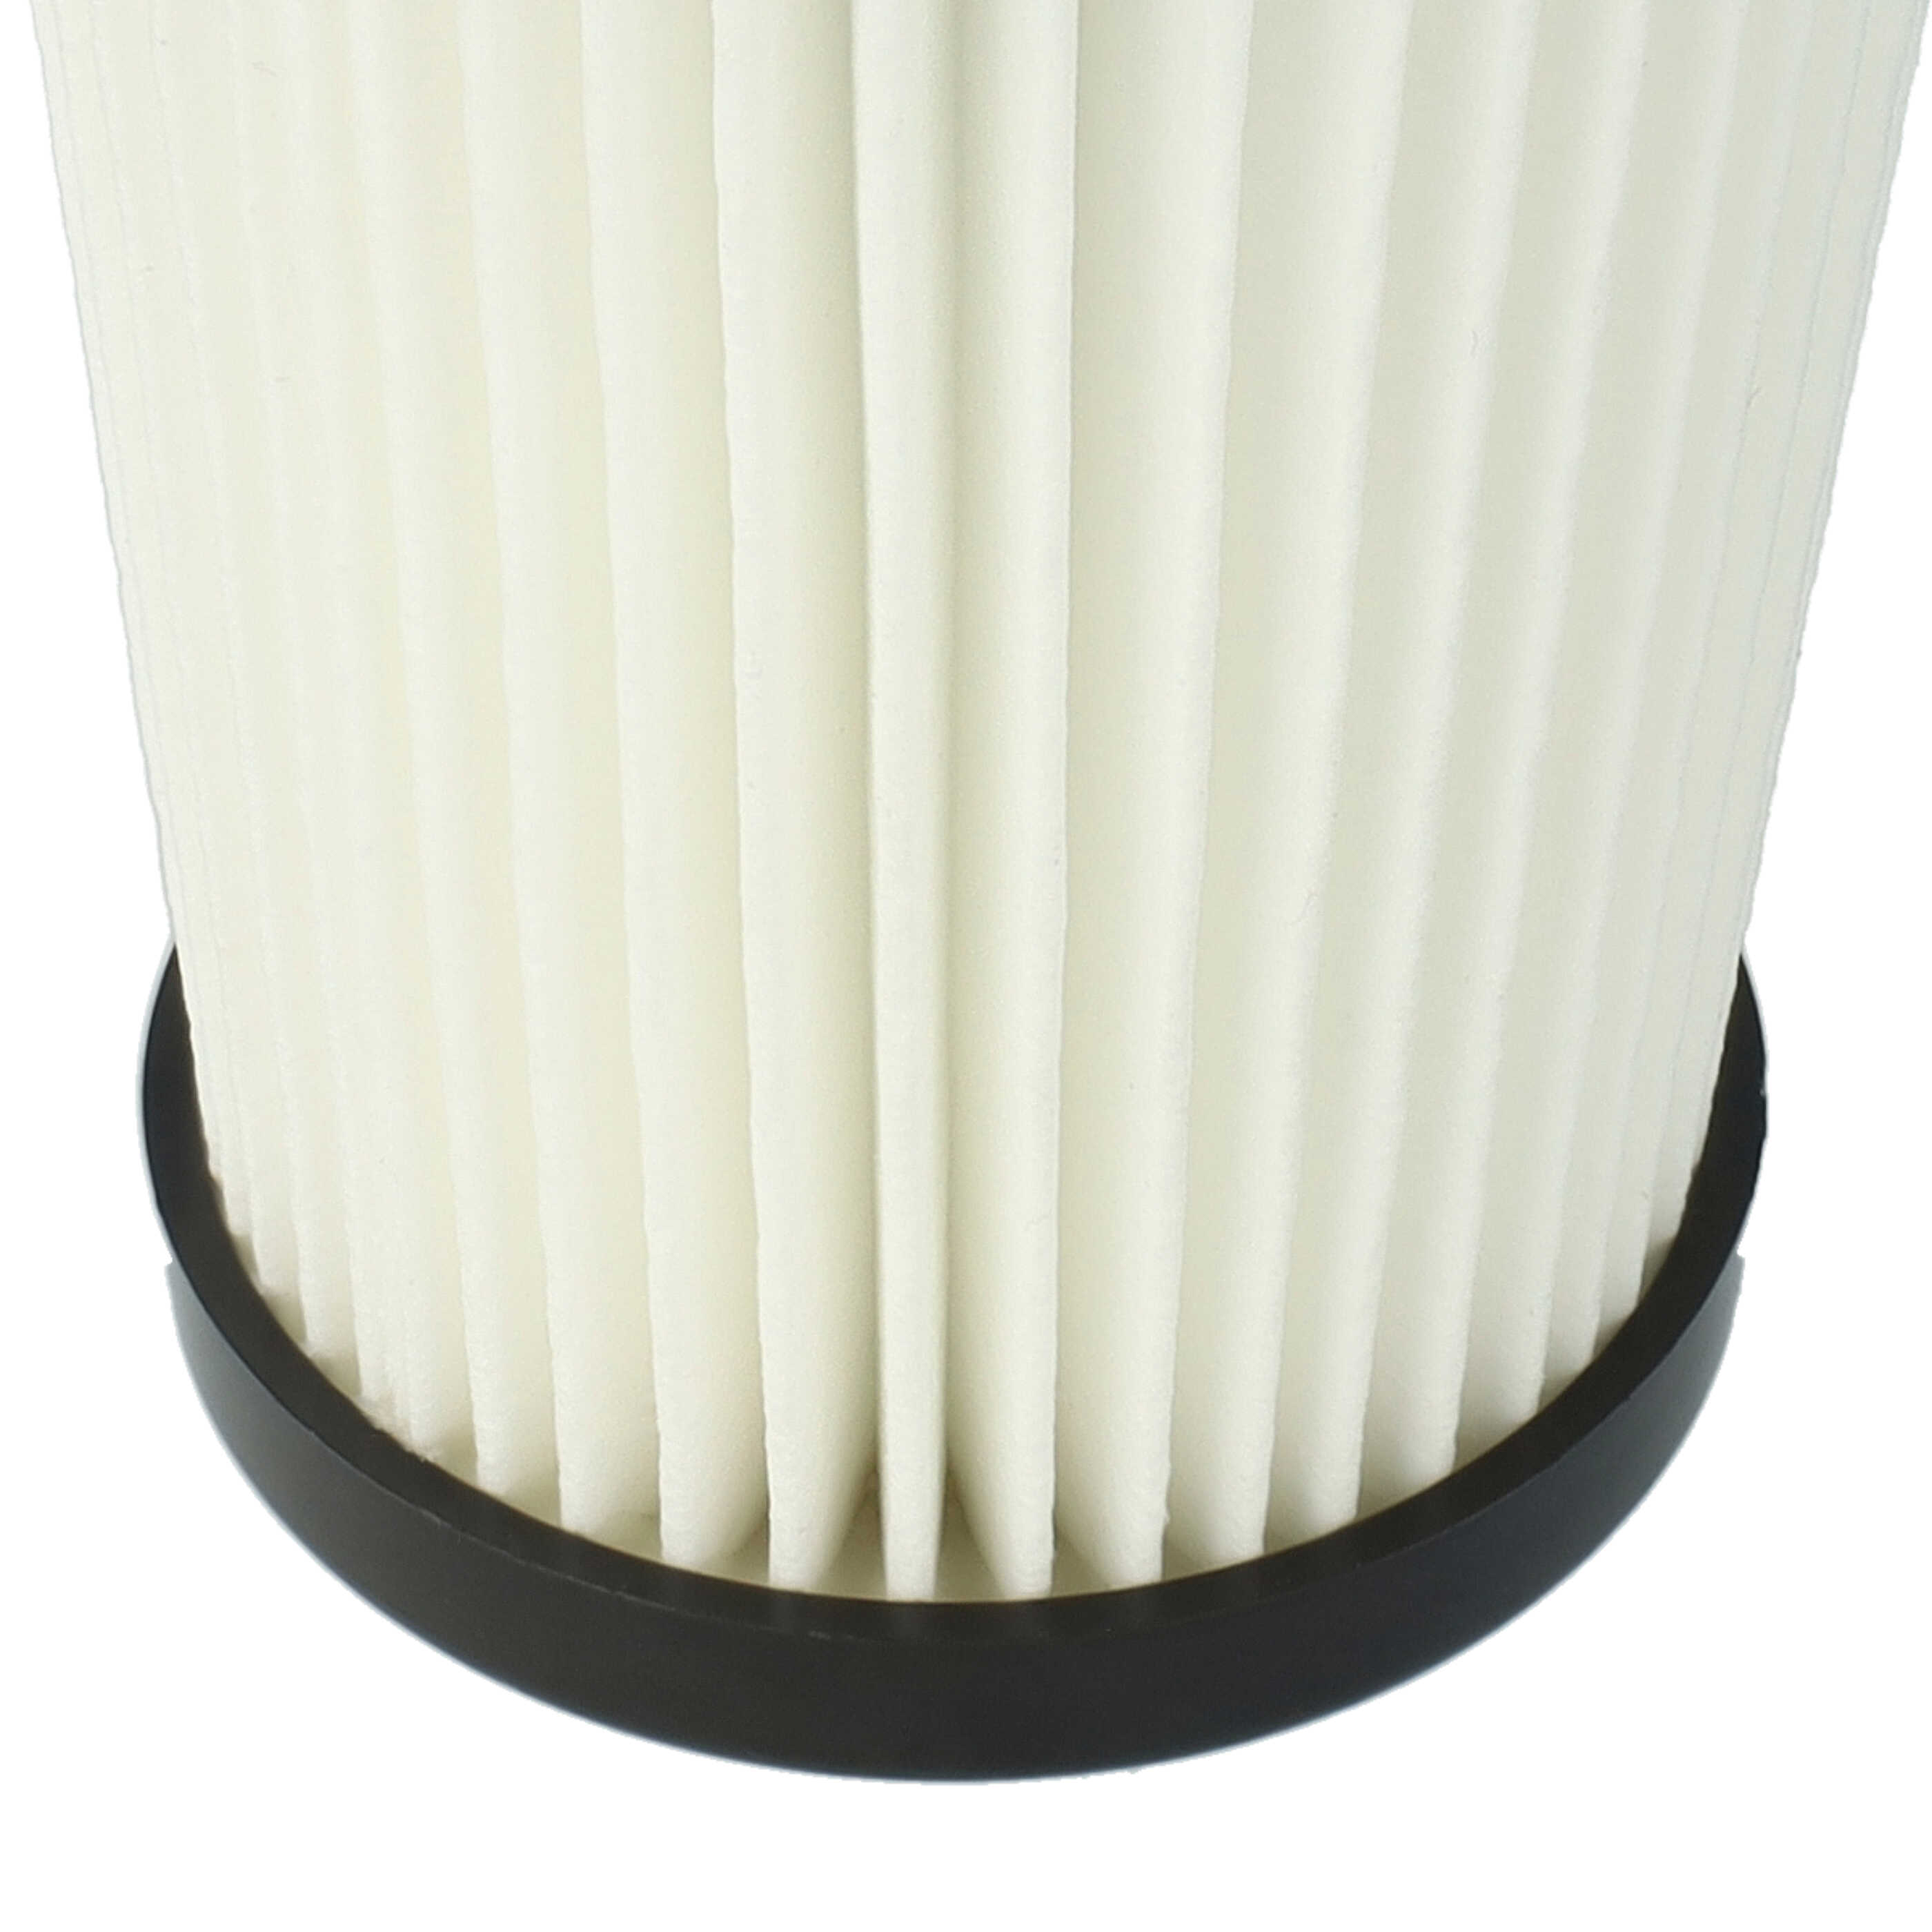 1x cartridge filter replaces Grundig 9178008590 for Arcelik Vacuum Cleaner